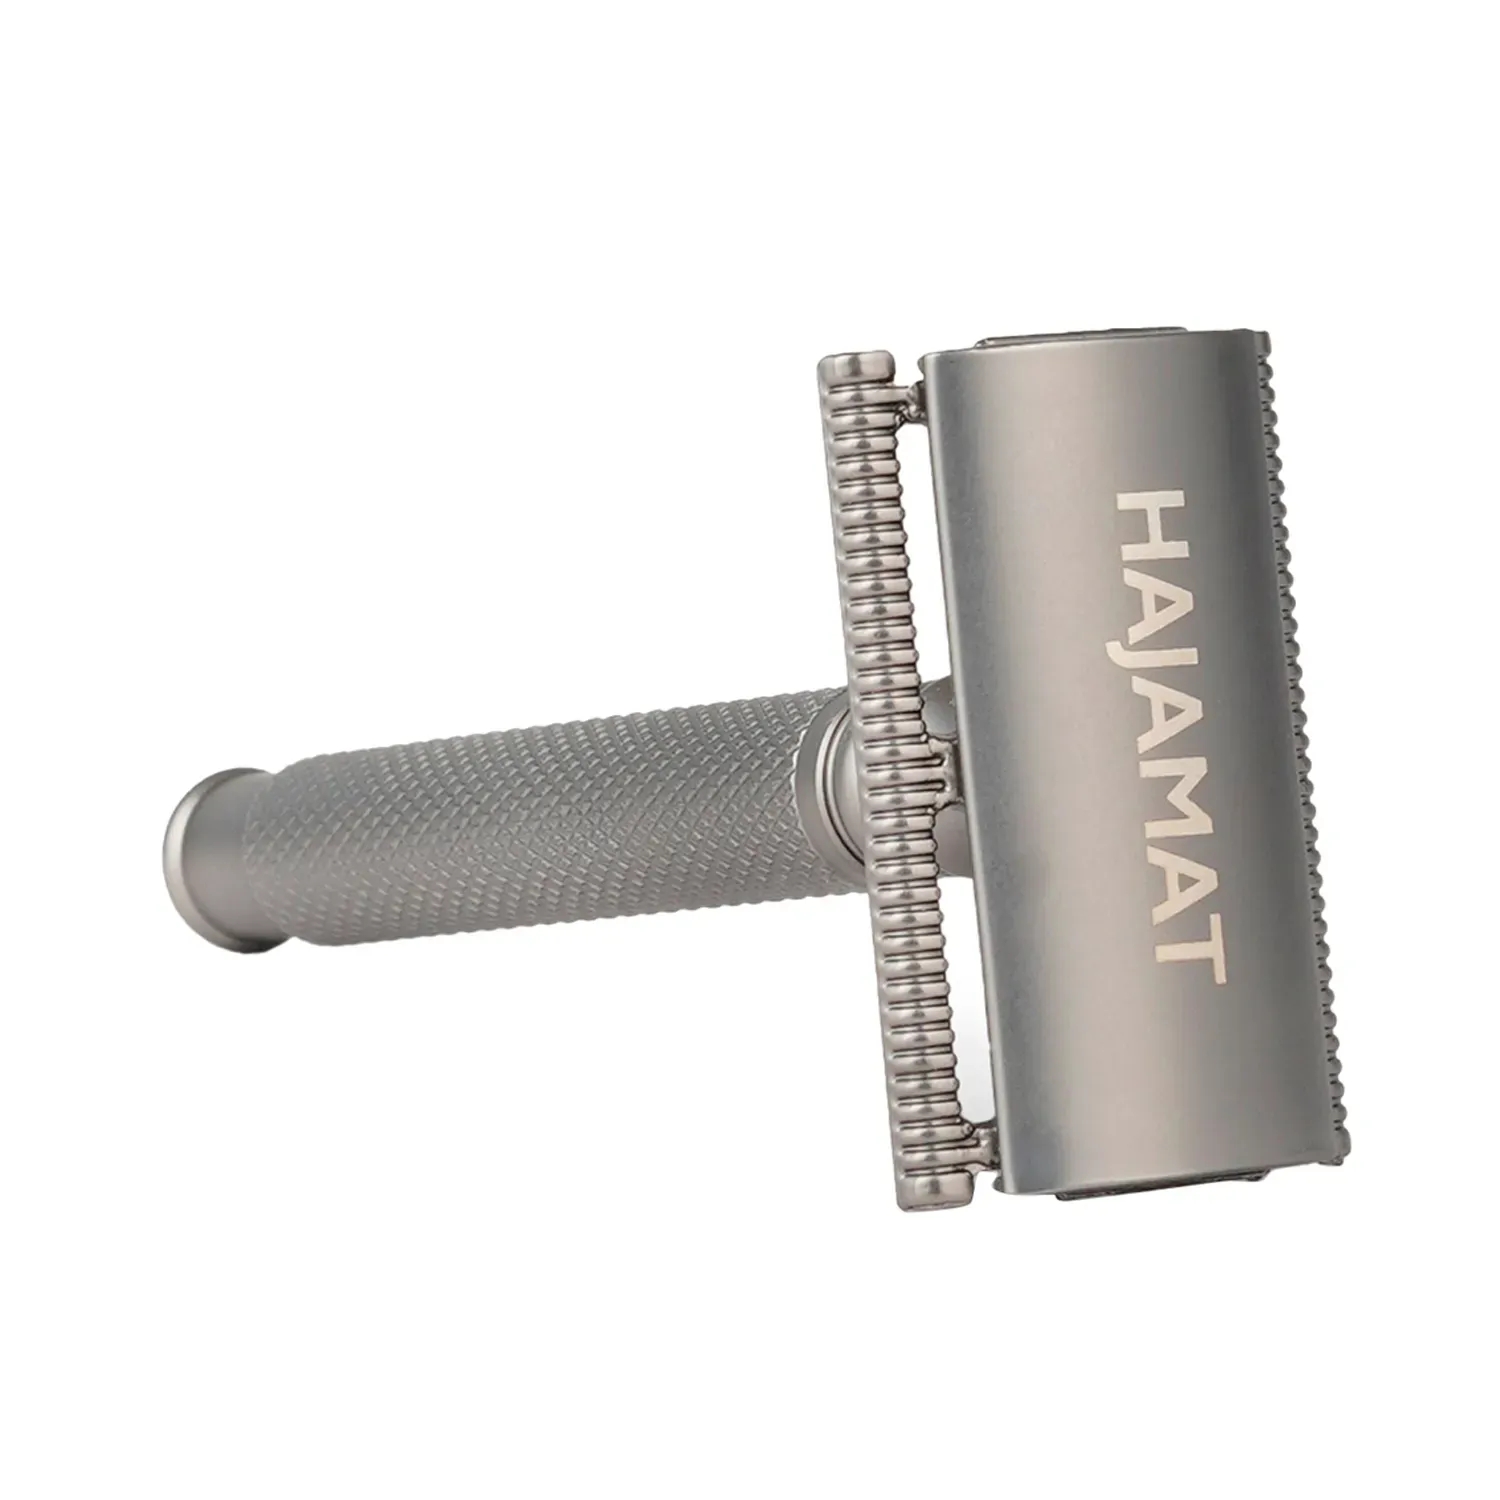 Hajamat | Hajamat Spade Double Edge Safety Razor, Stainless Steel 304, Gunmetal Finish